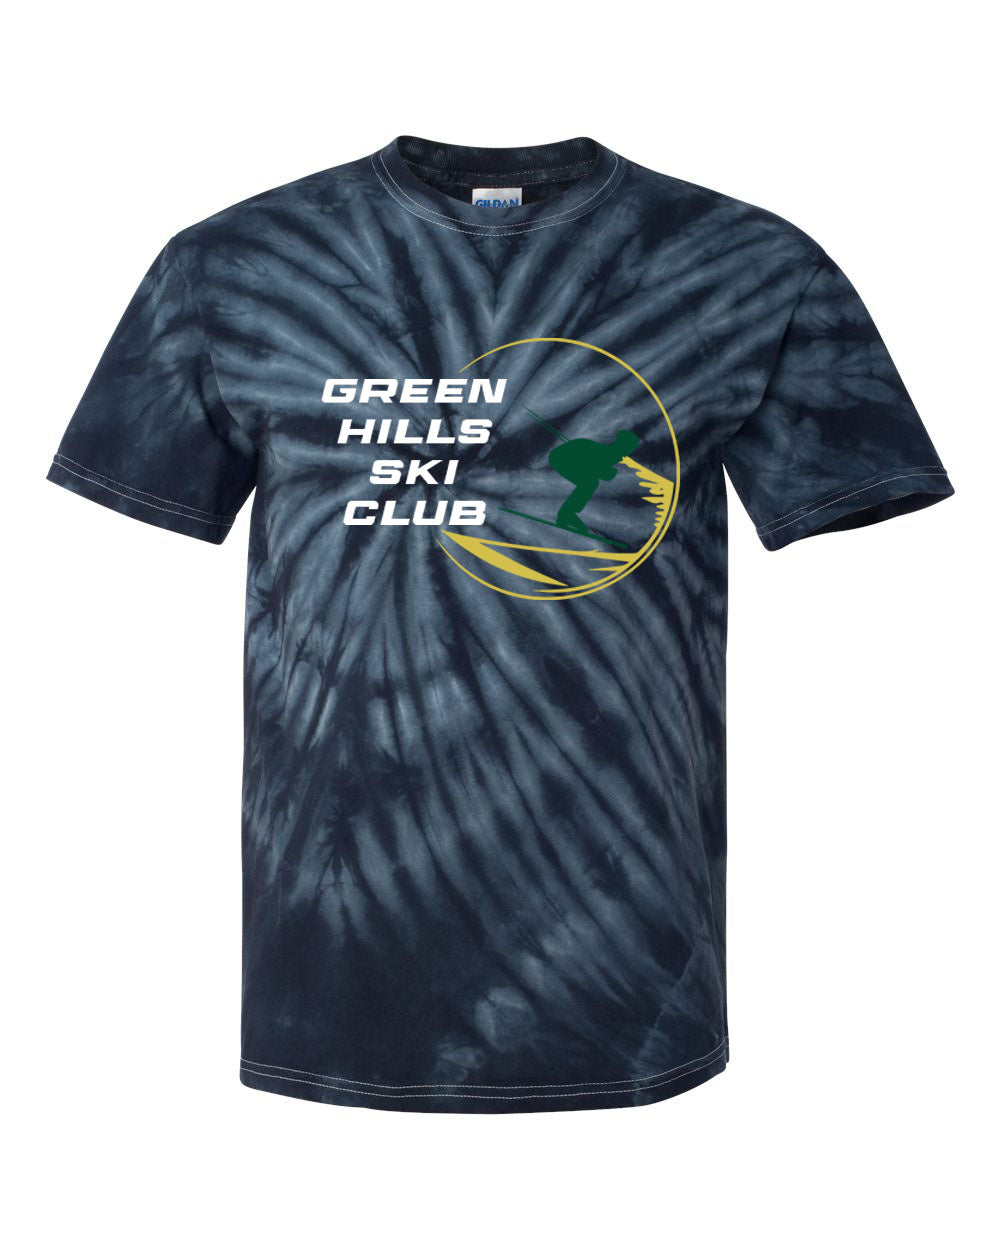 Green Hills Ski Club Tie Dye t-shirt Design 1